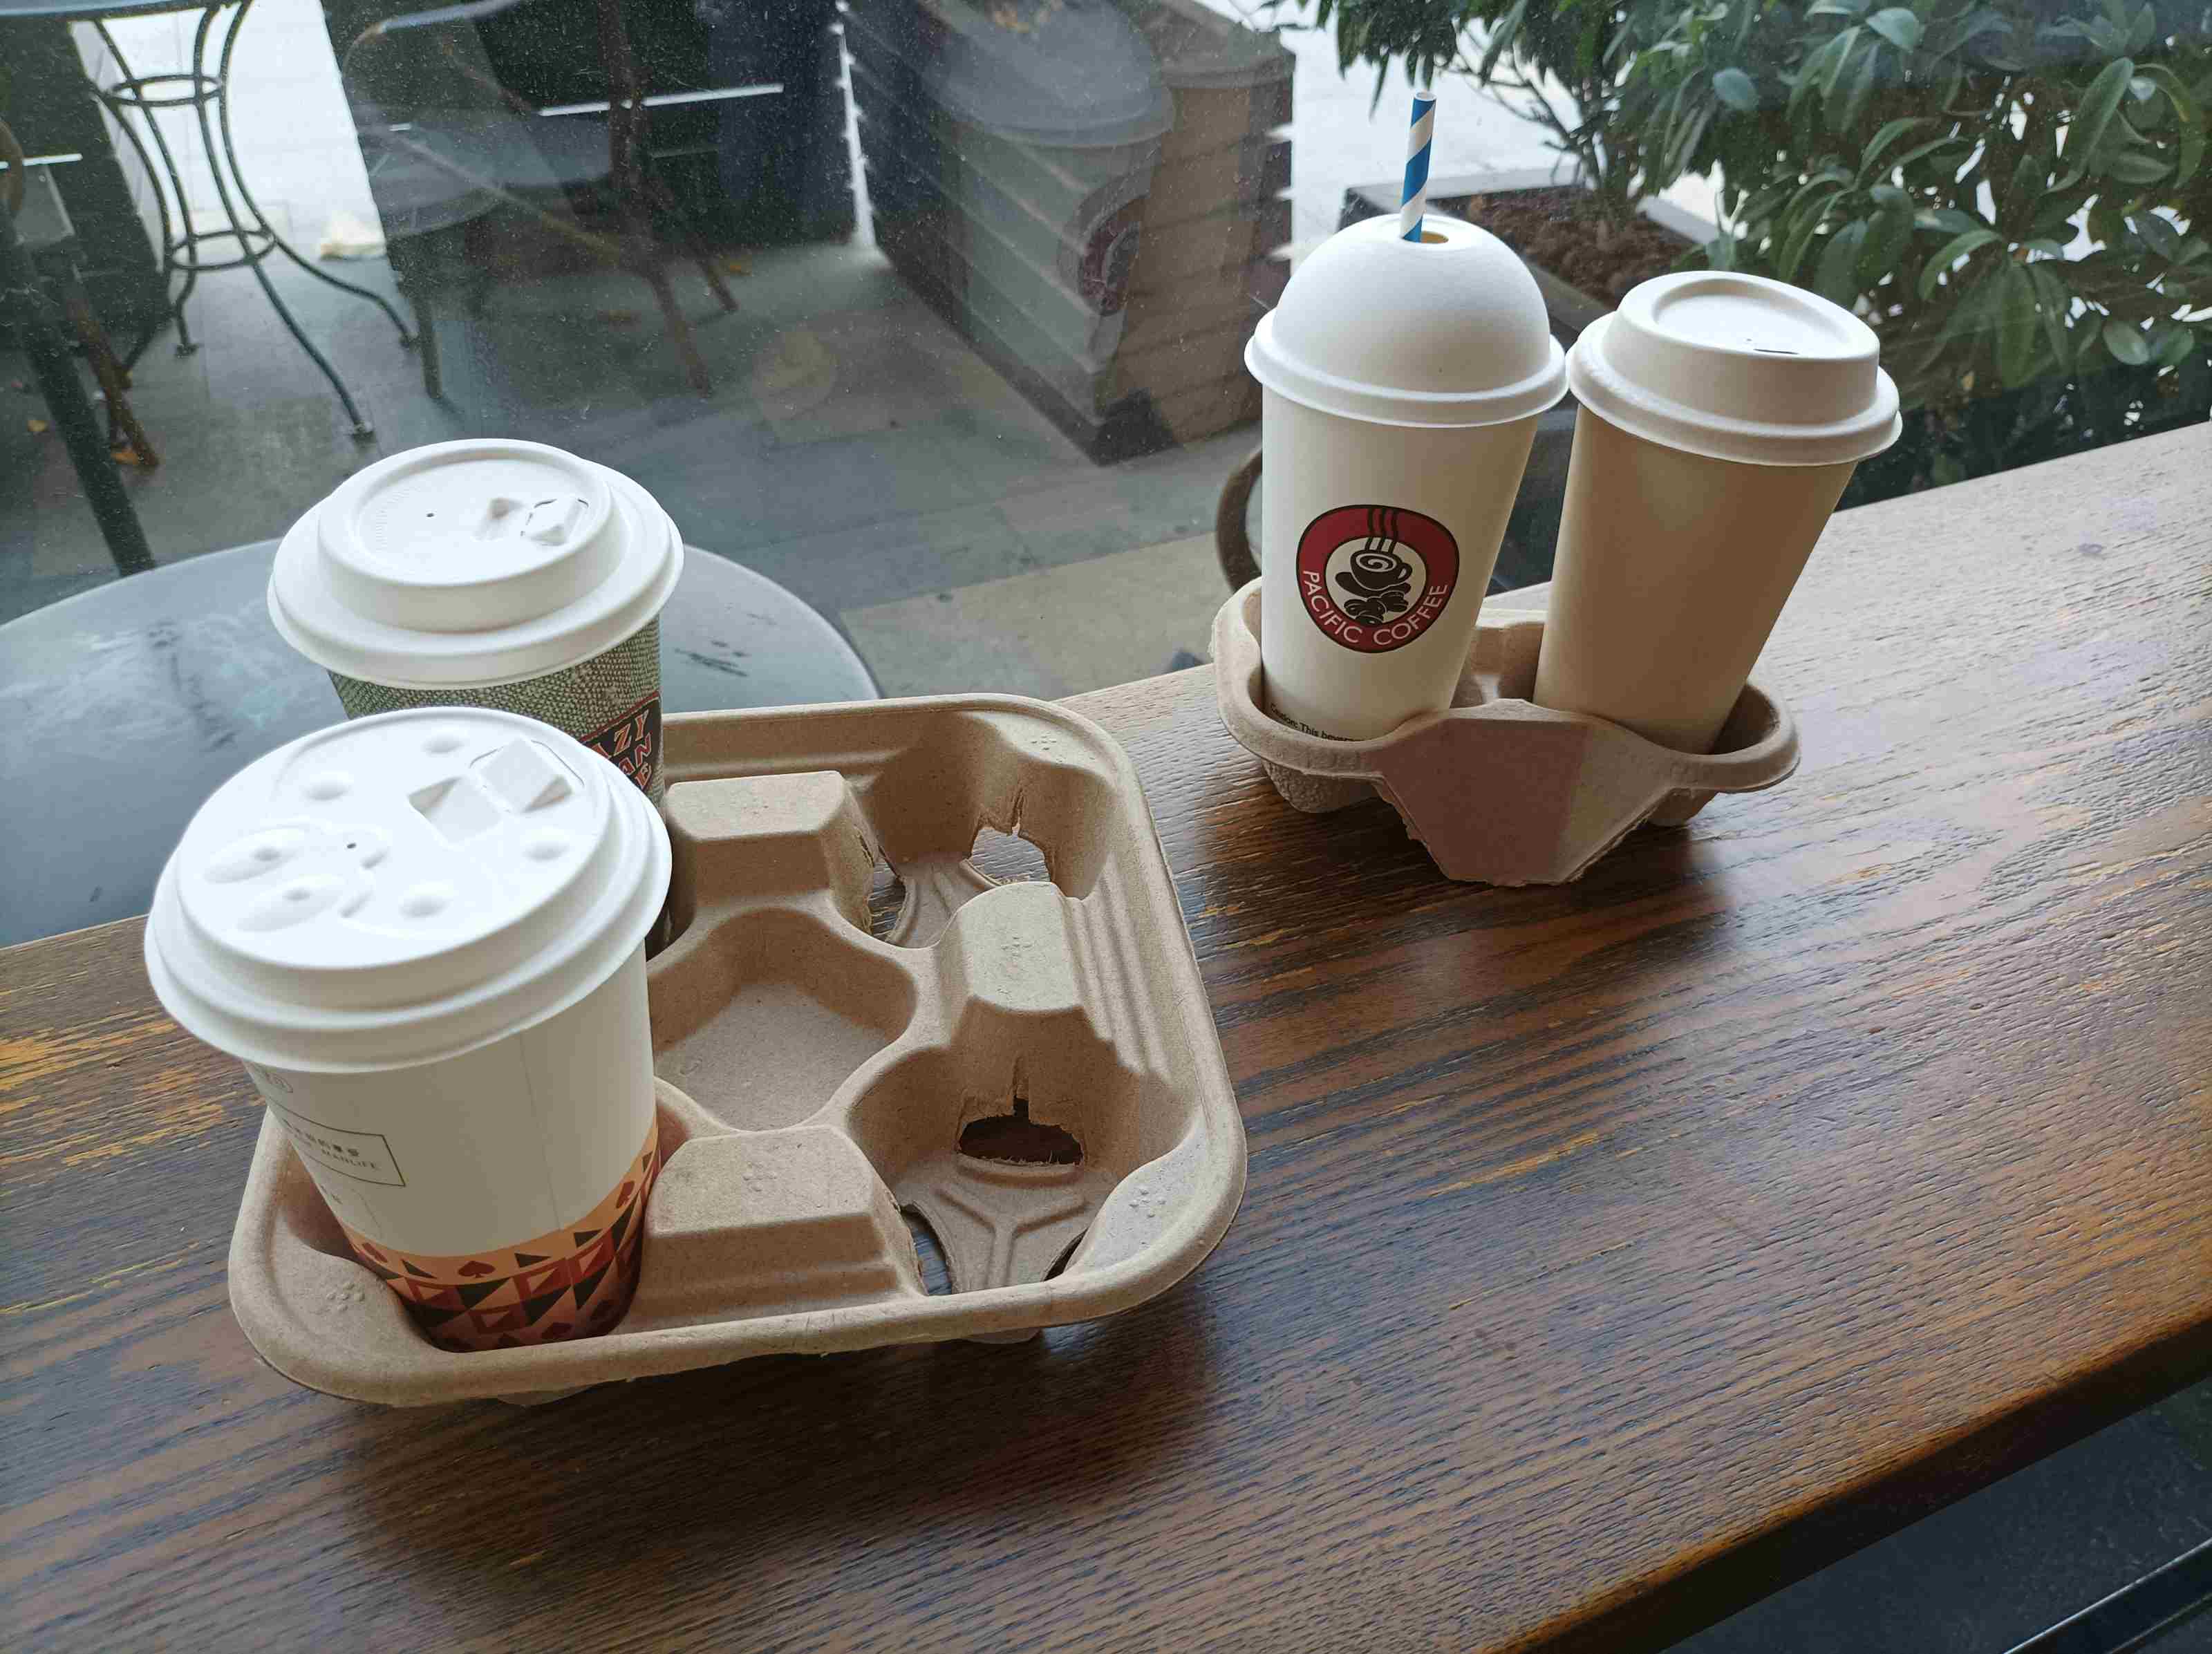 paper coffee lids